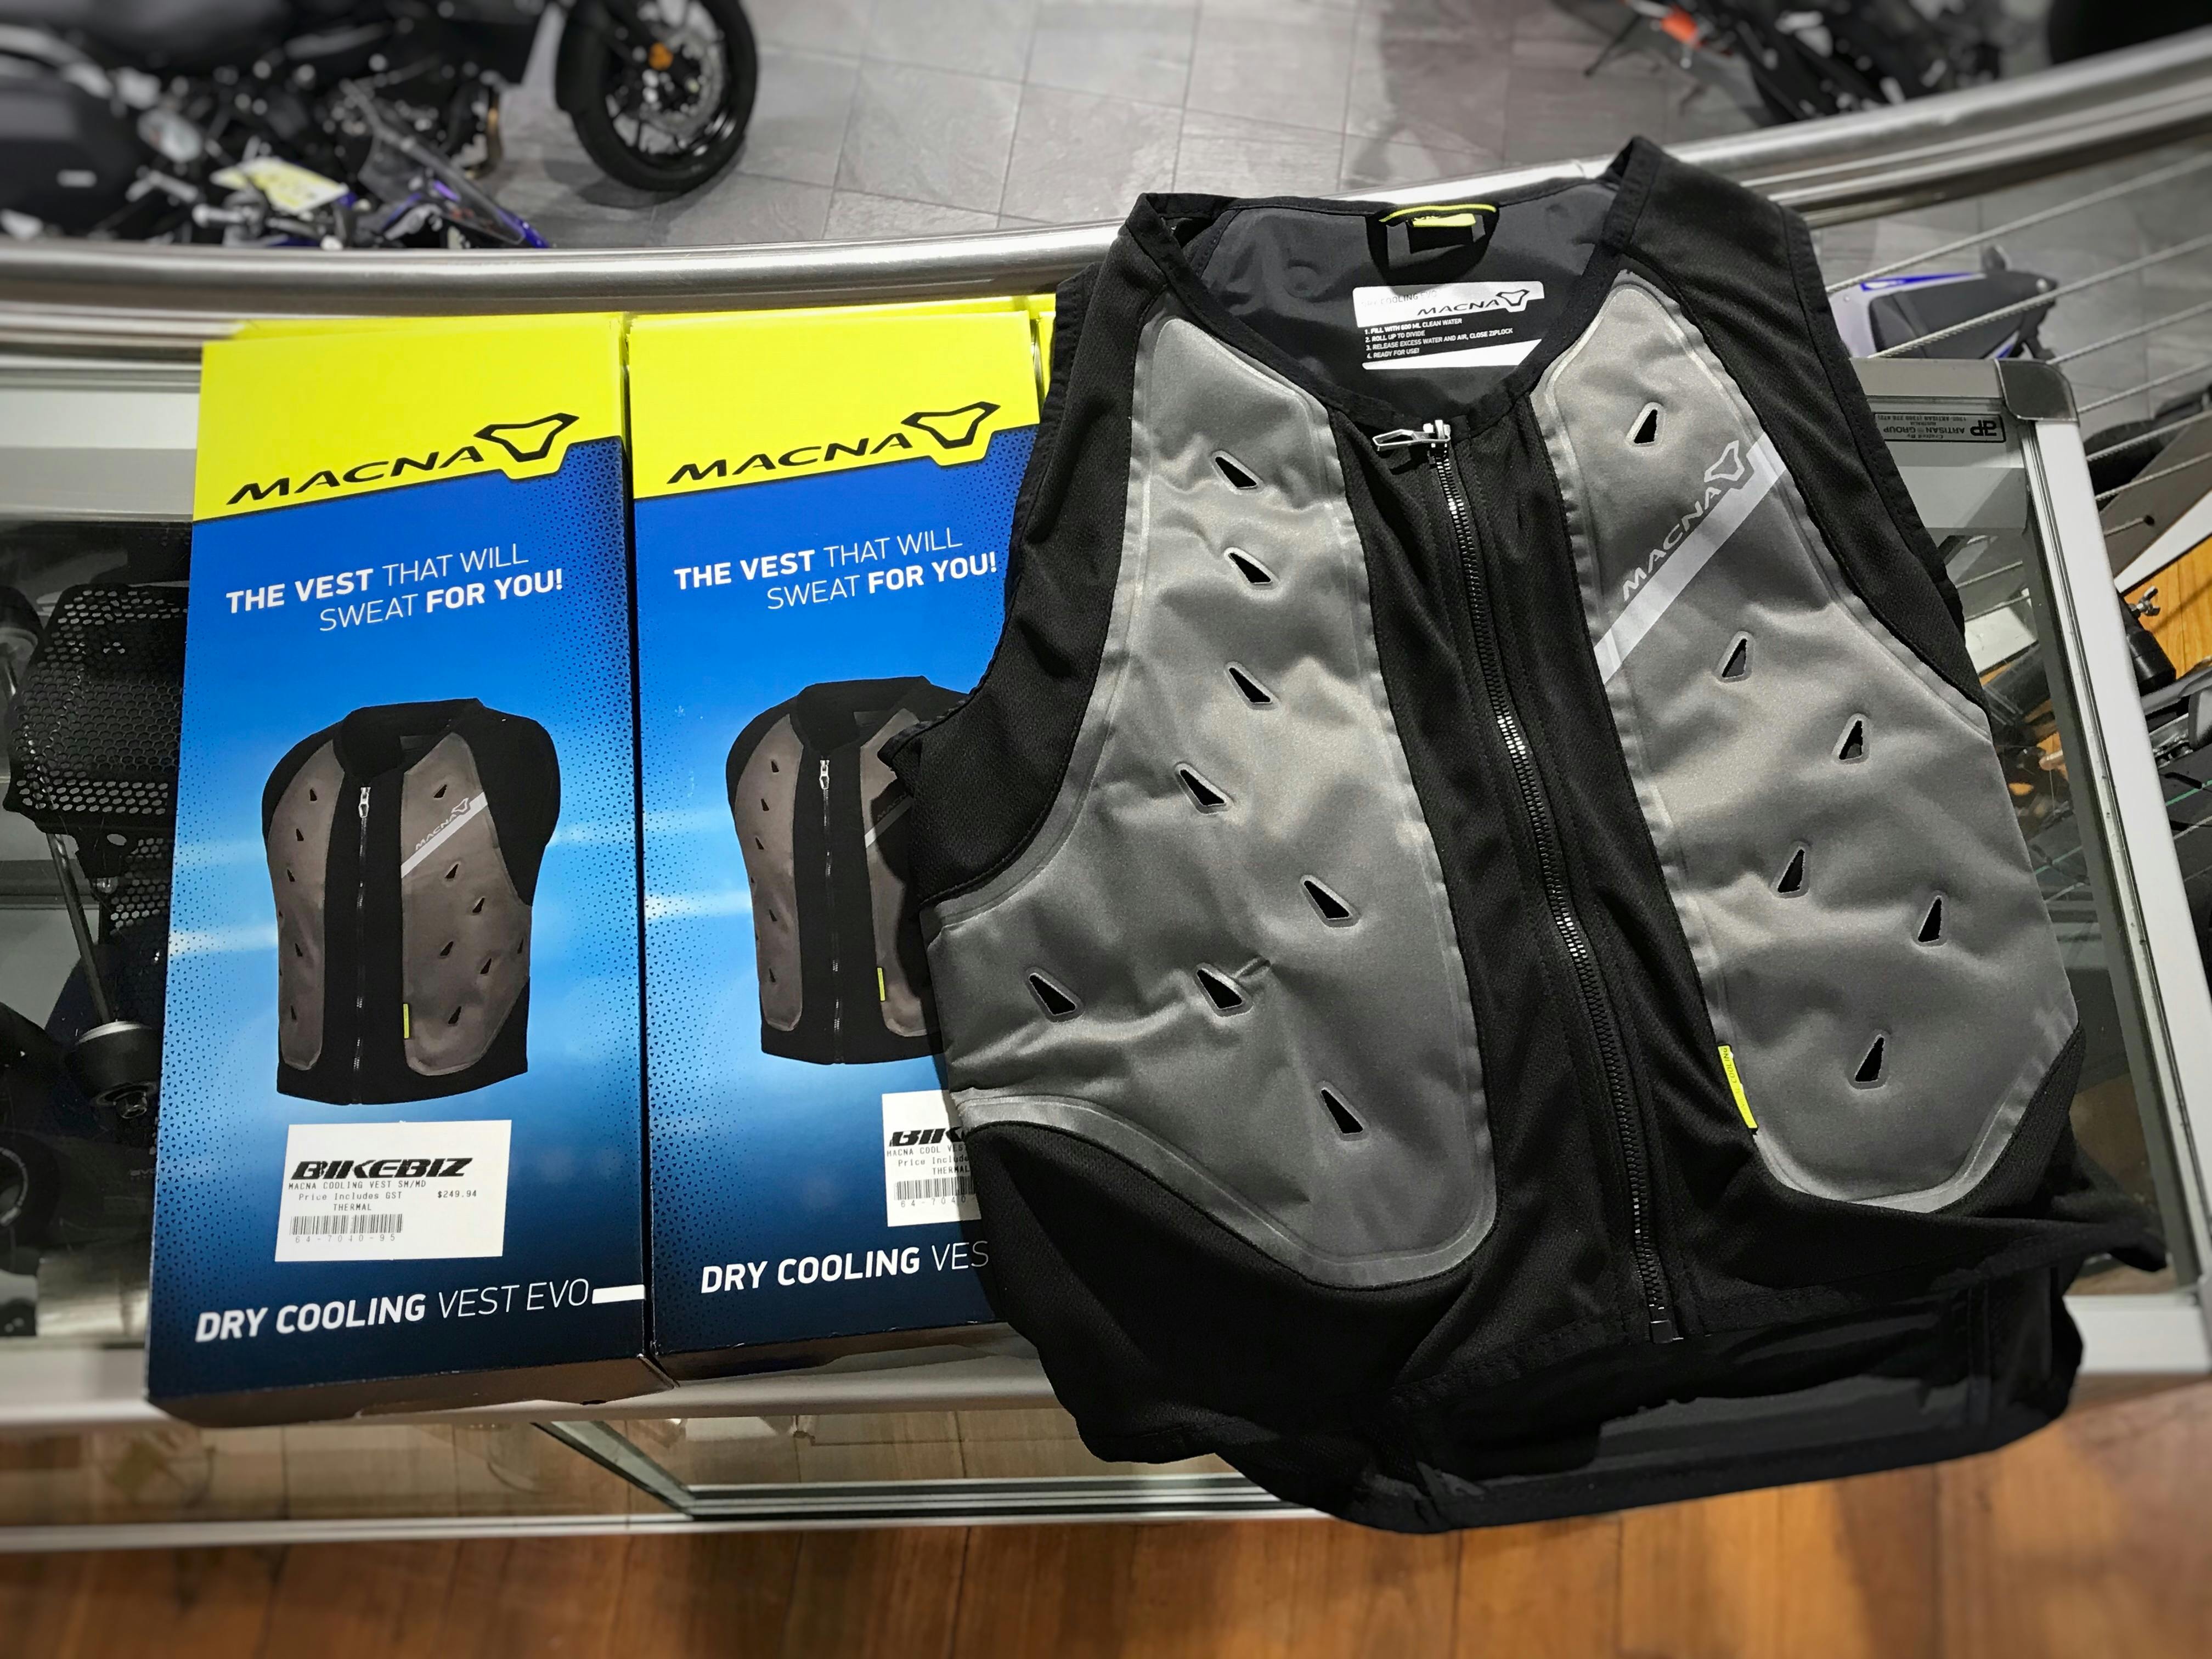 Macna Dry Cooling vest in store at Bikebiz